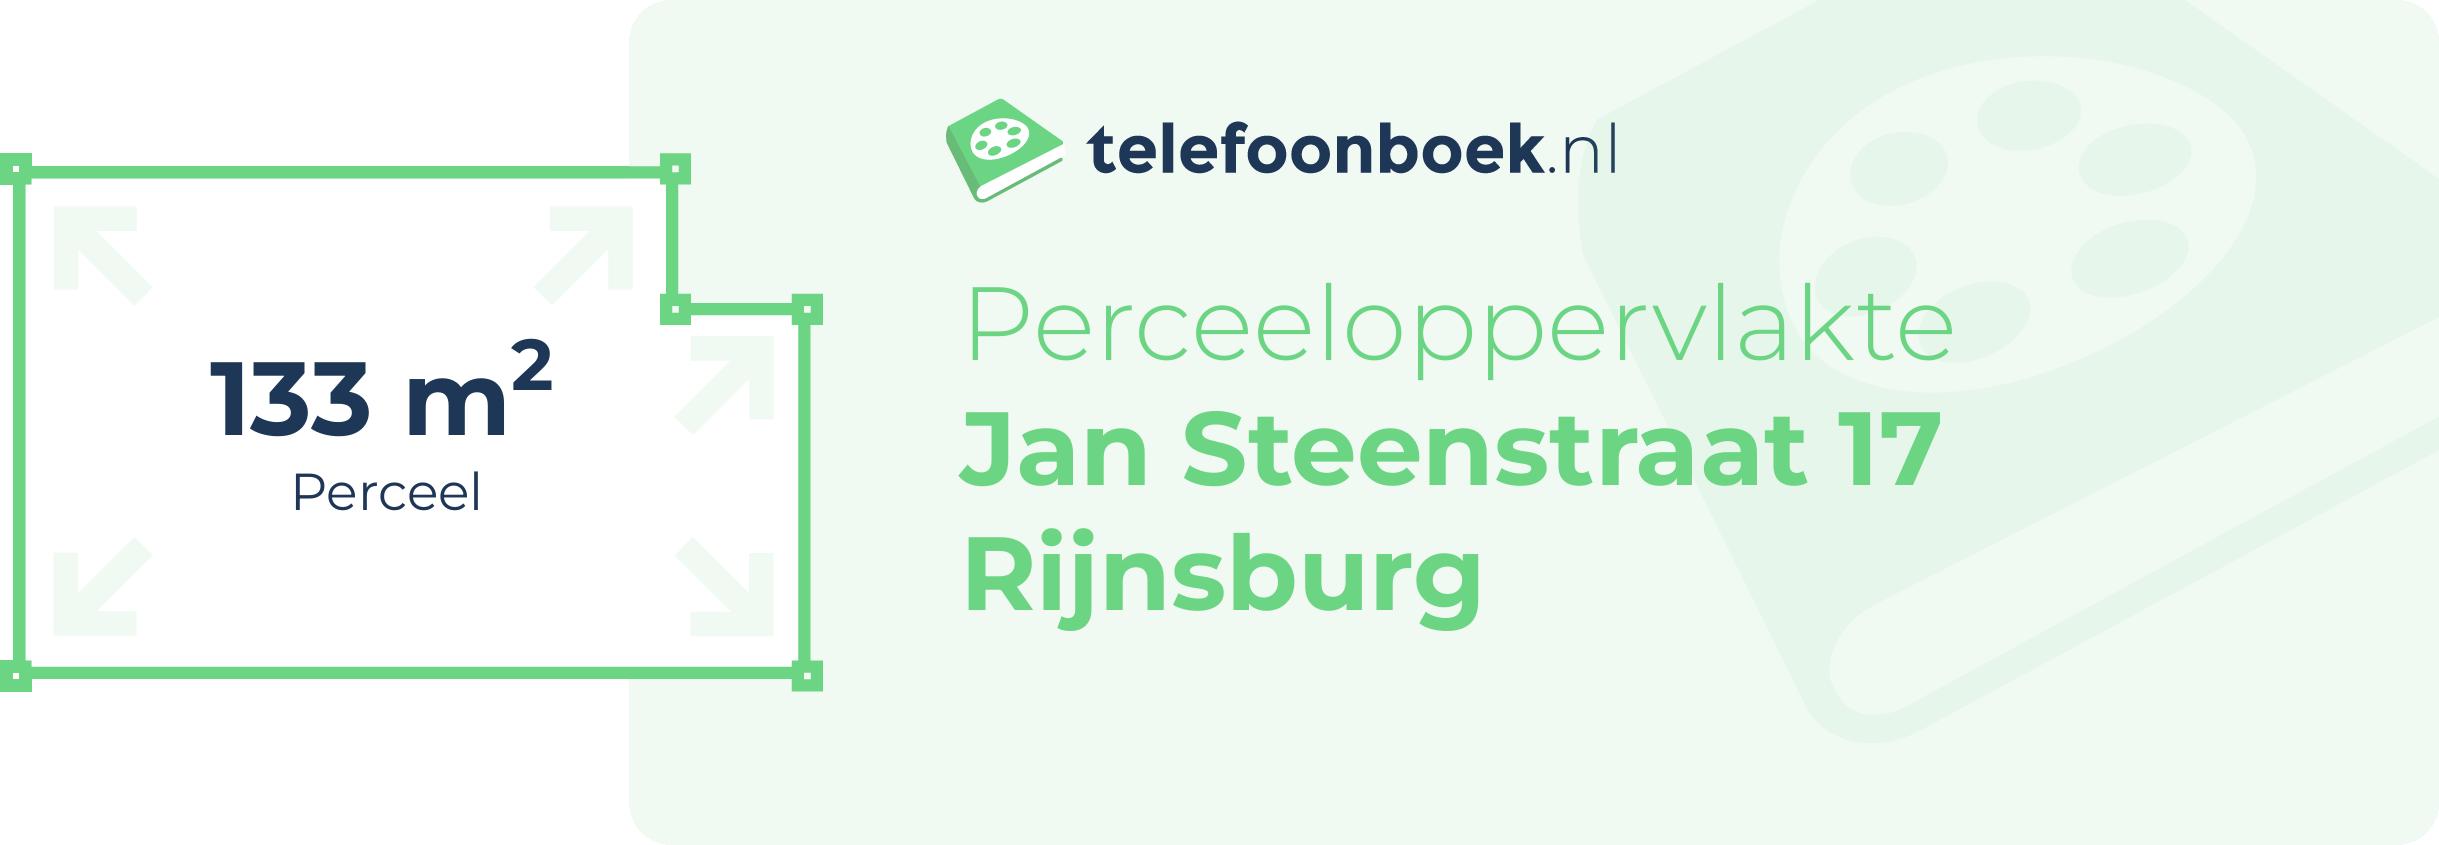 Perceeloppervlakte Jan Steenstraat 17 Rijnsburg